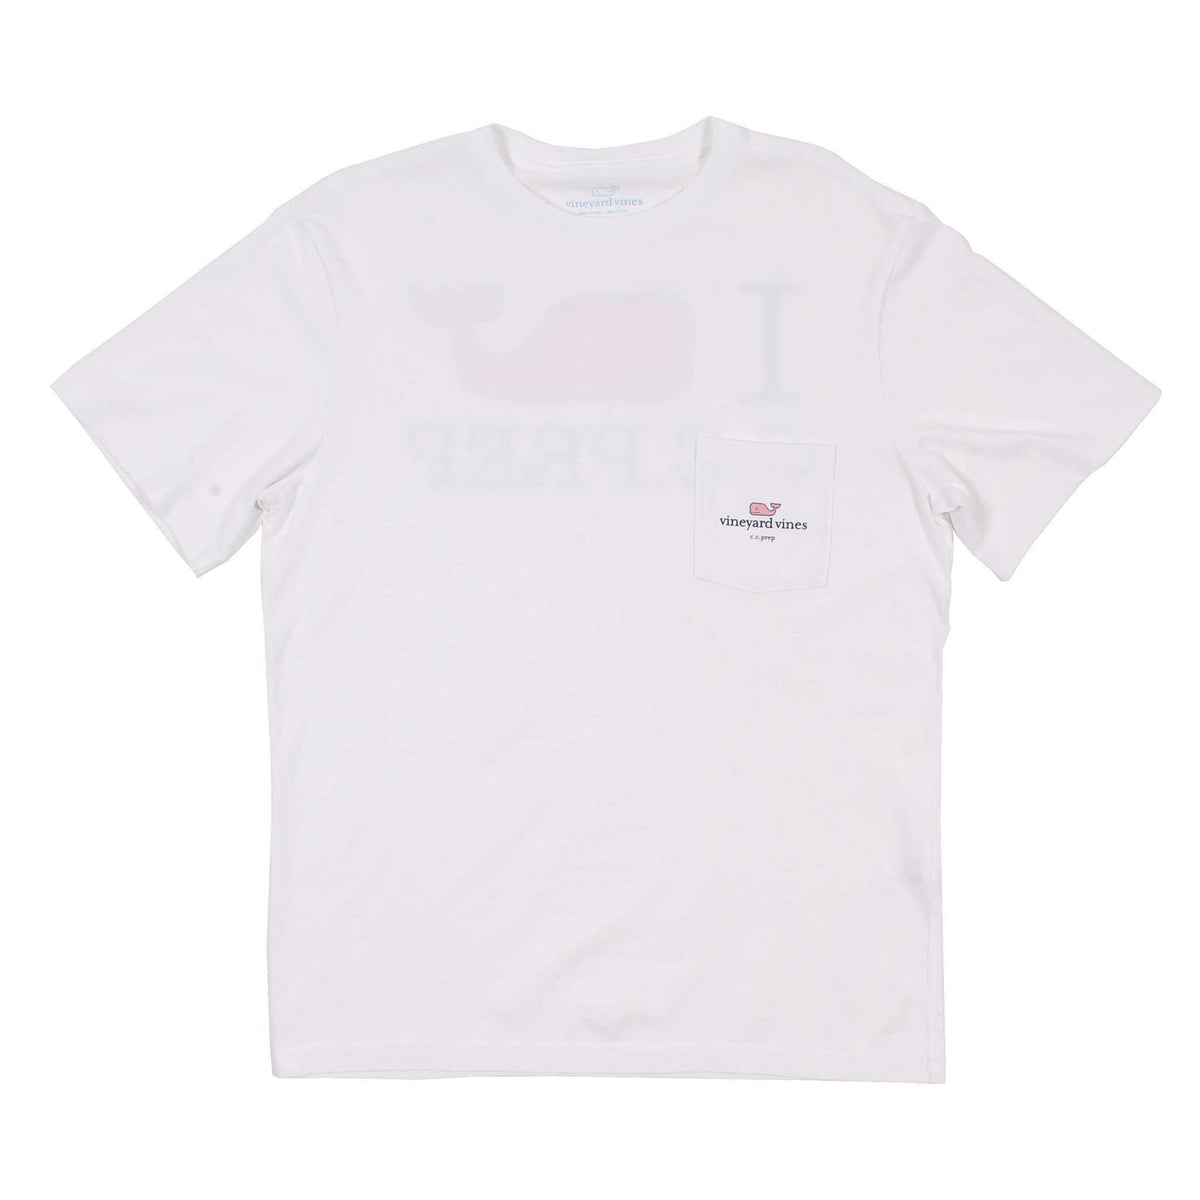 I Whale CC Prep Tee Shirt in White Cap by Vineyard Vines - Country Club Prep